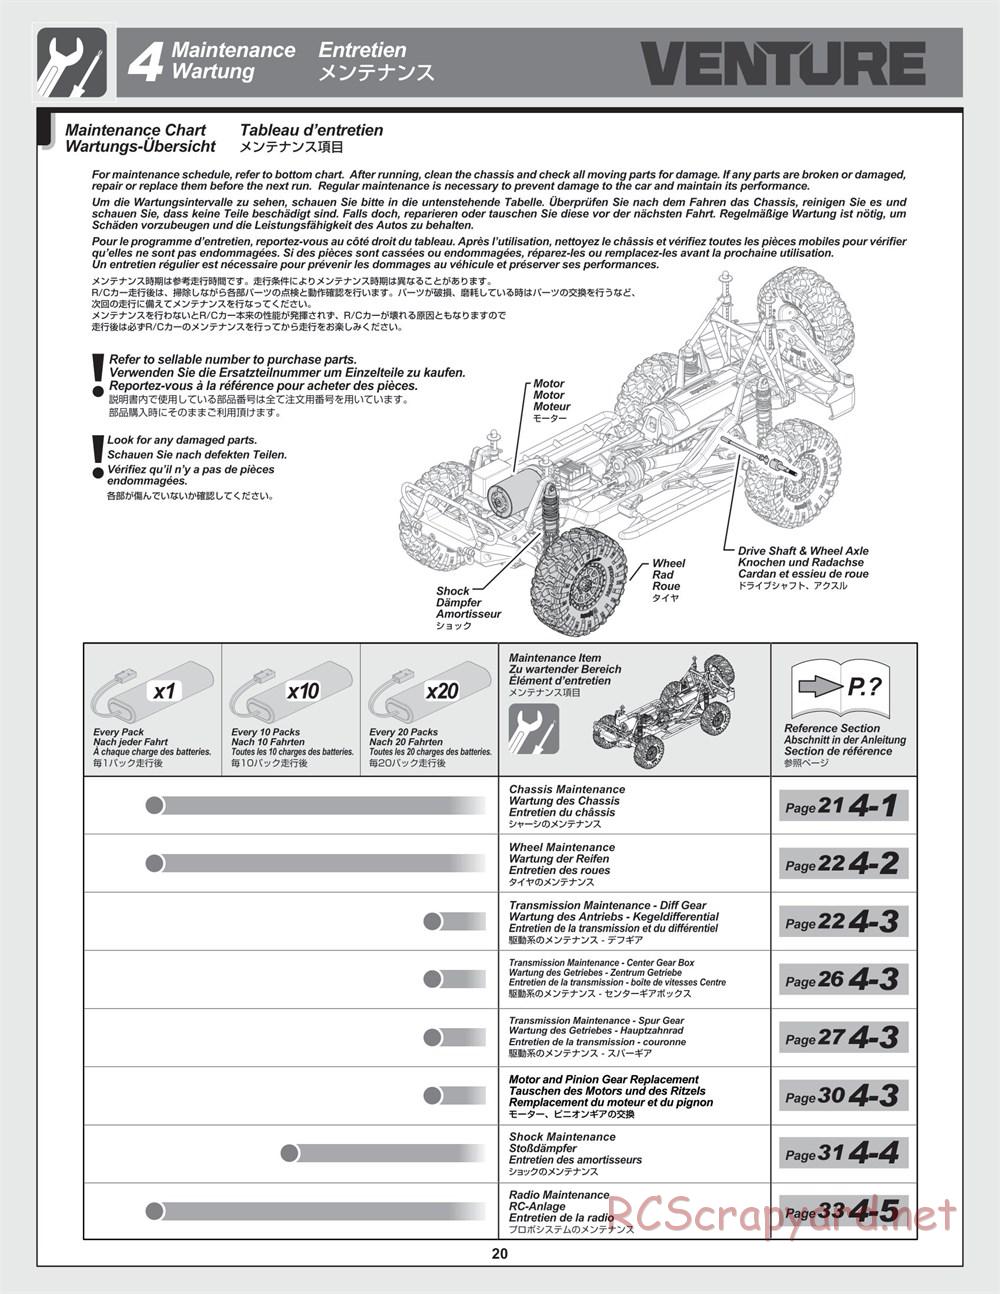 HPI - Venture Crawler - Manual - Page 20